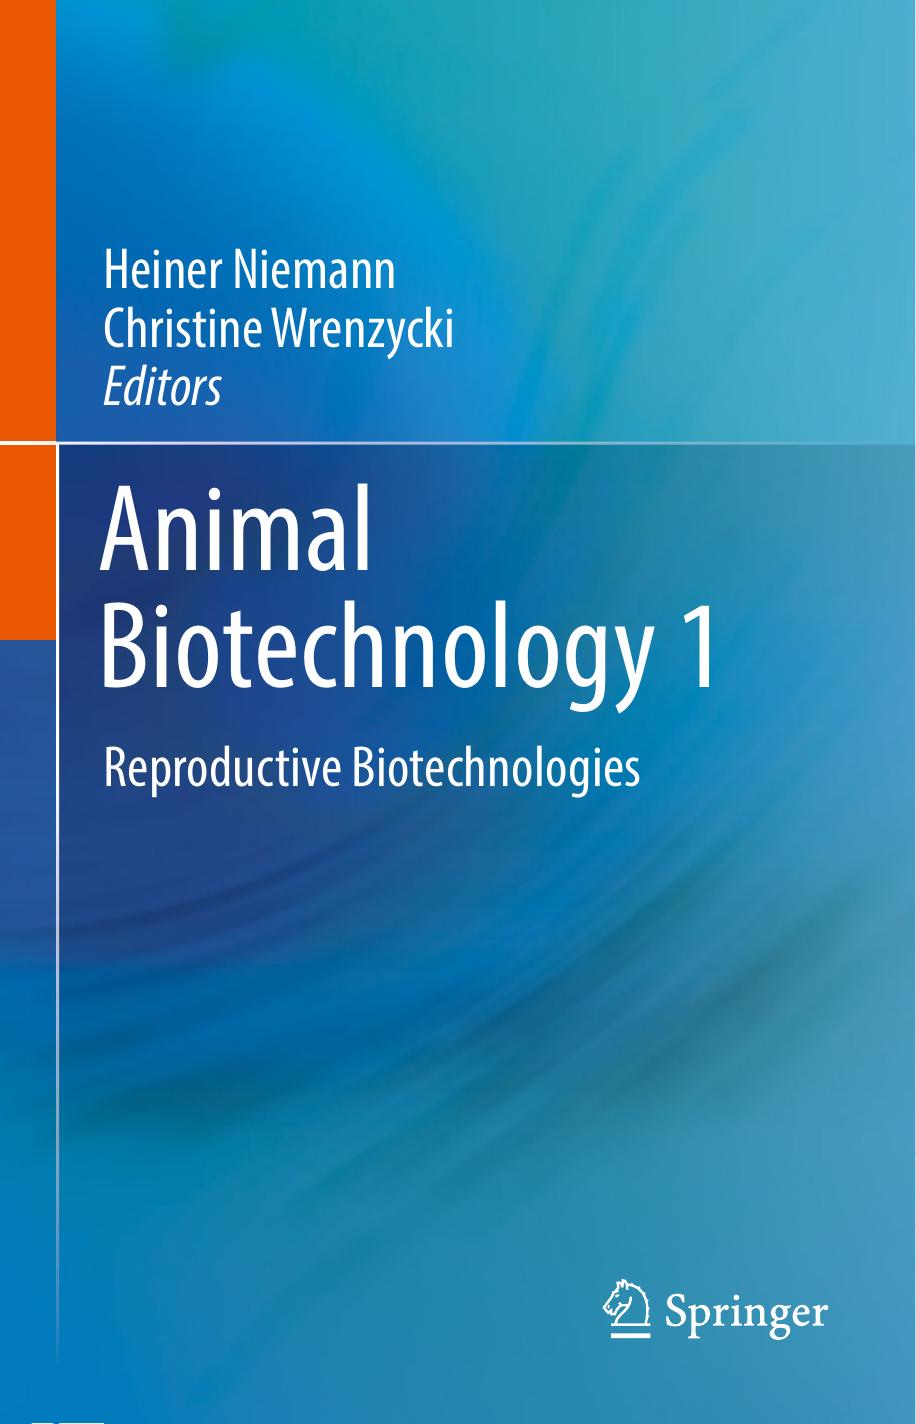 Animal Biotechnology 1 Reproductive Biotechnologies 2018